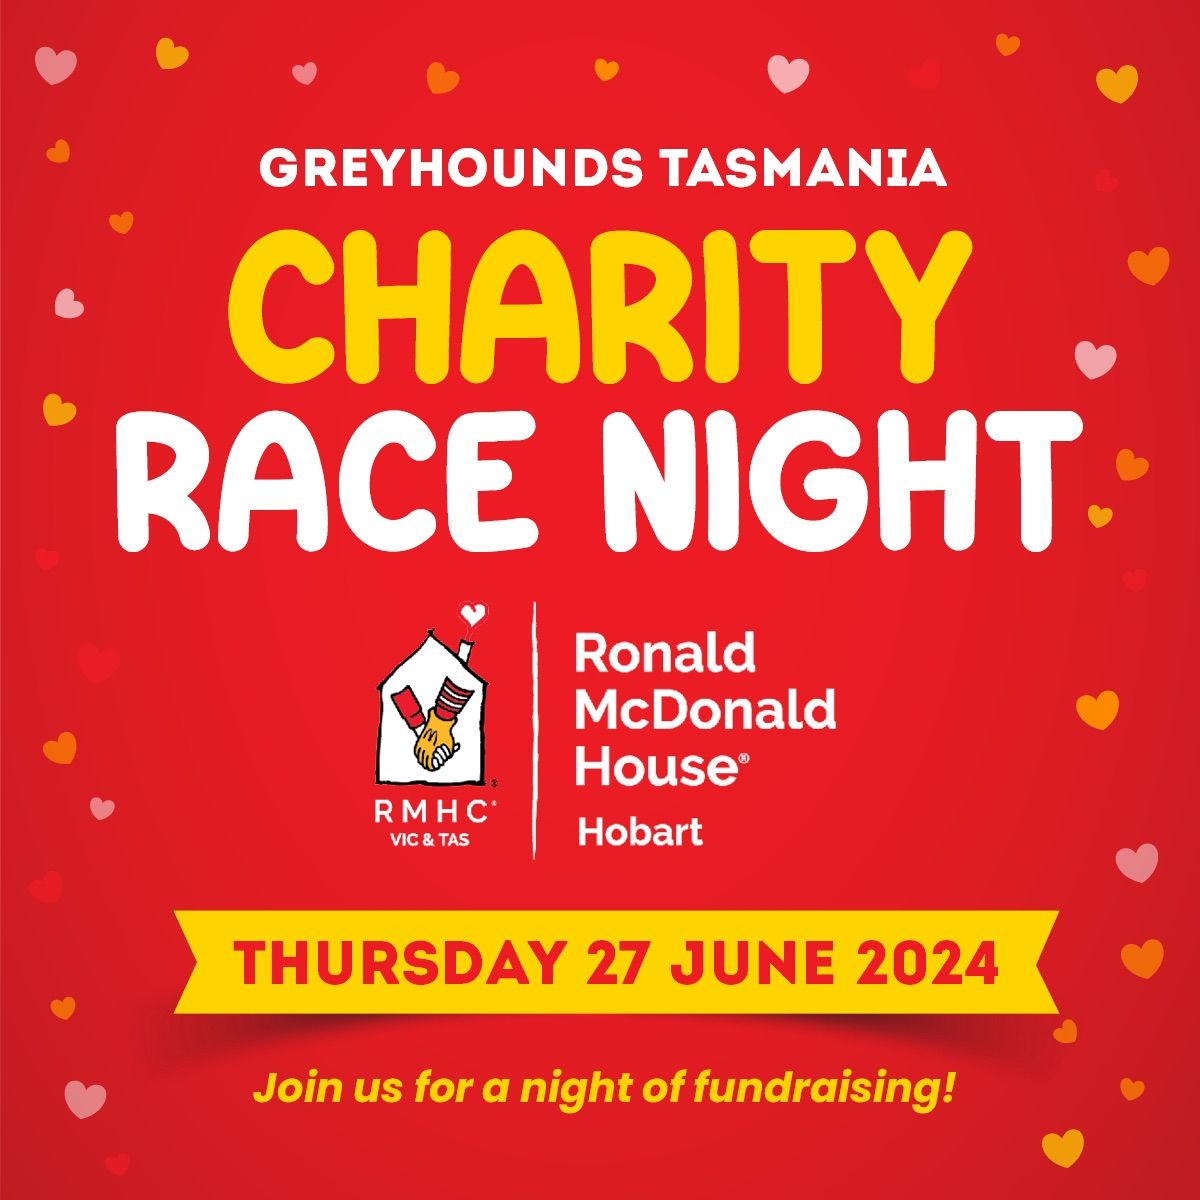 Ronald McDonald House Hobart Charity Race Night 